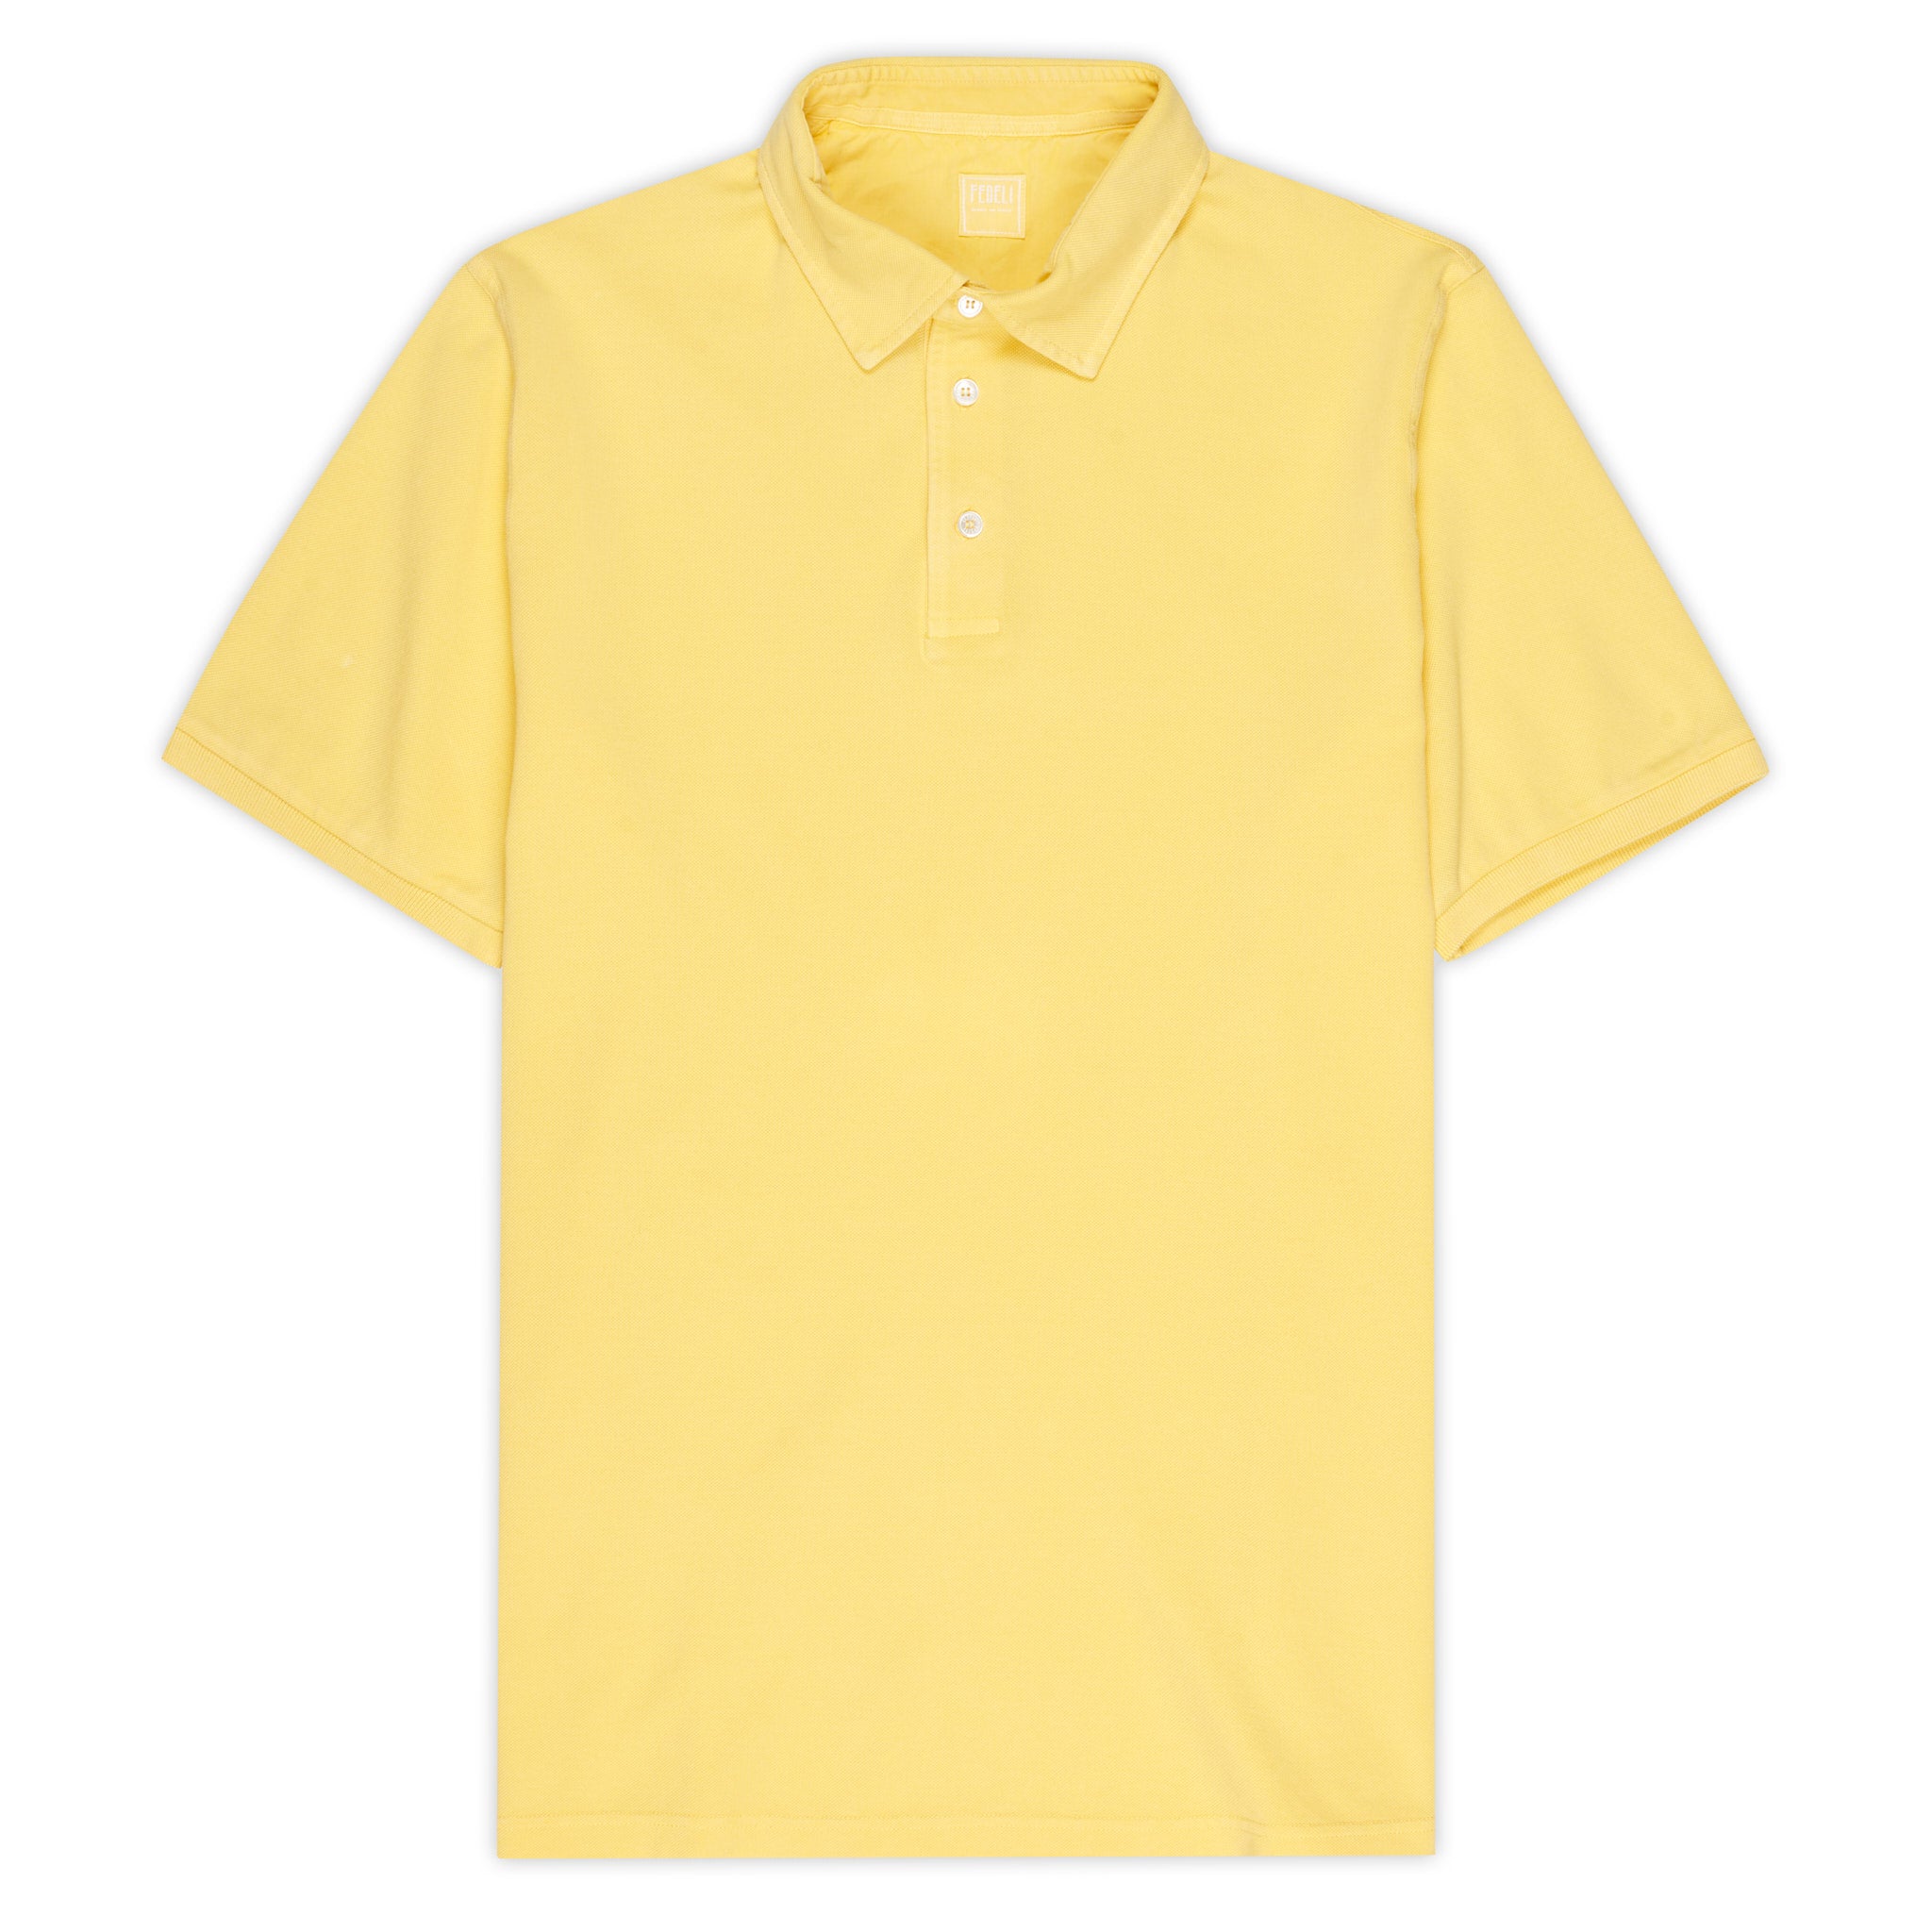 FEDELI "North" Yellow Cotton Pique Short Sleeve Polo Shirt 56 NEW 2XL Slim Fit FEDELI